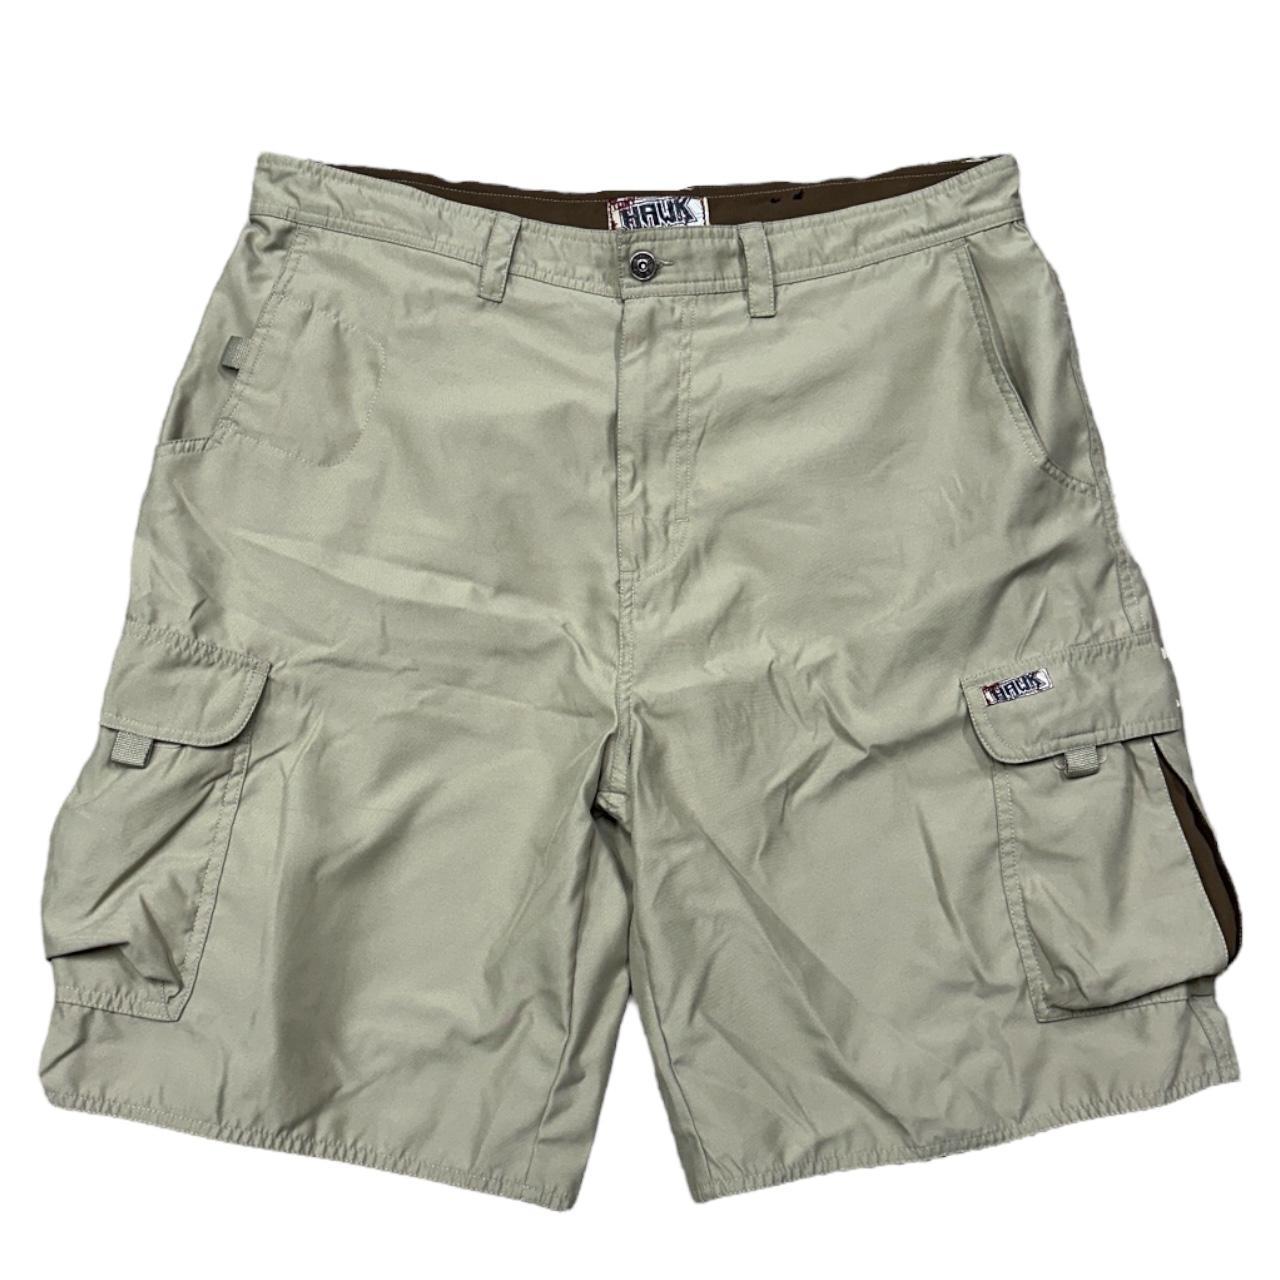 Vintage Tony Hawk Cargo Shorts 7 pockets... - Depop